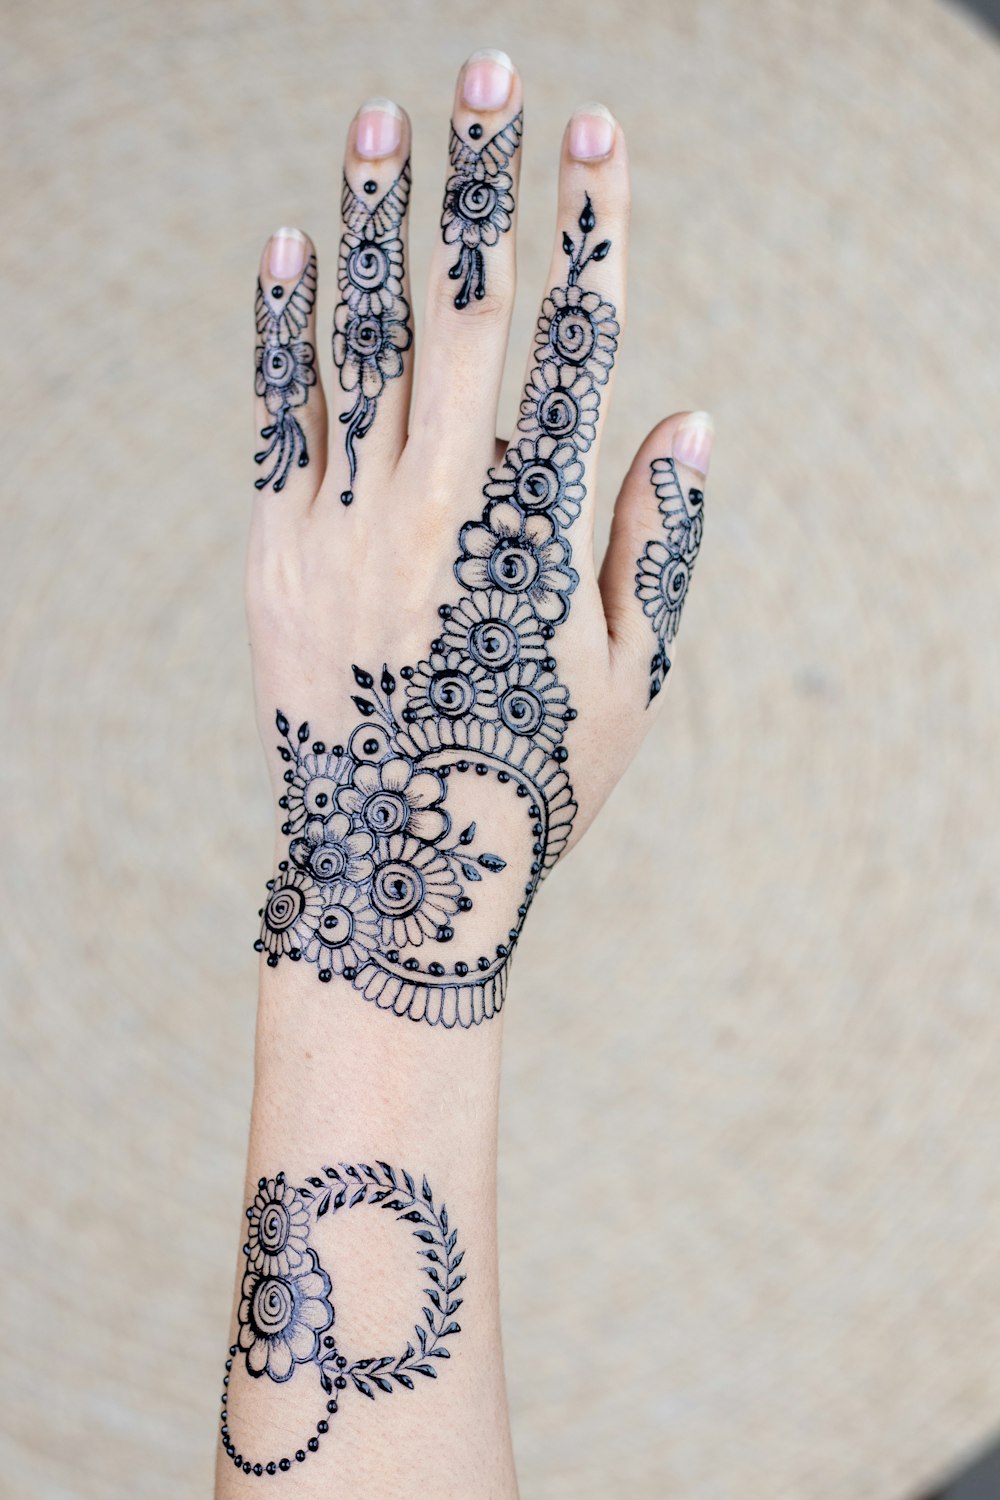 Left Hand With Mehndi Tattoo Photo Free Skin Image On Unsplash